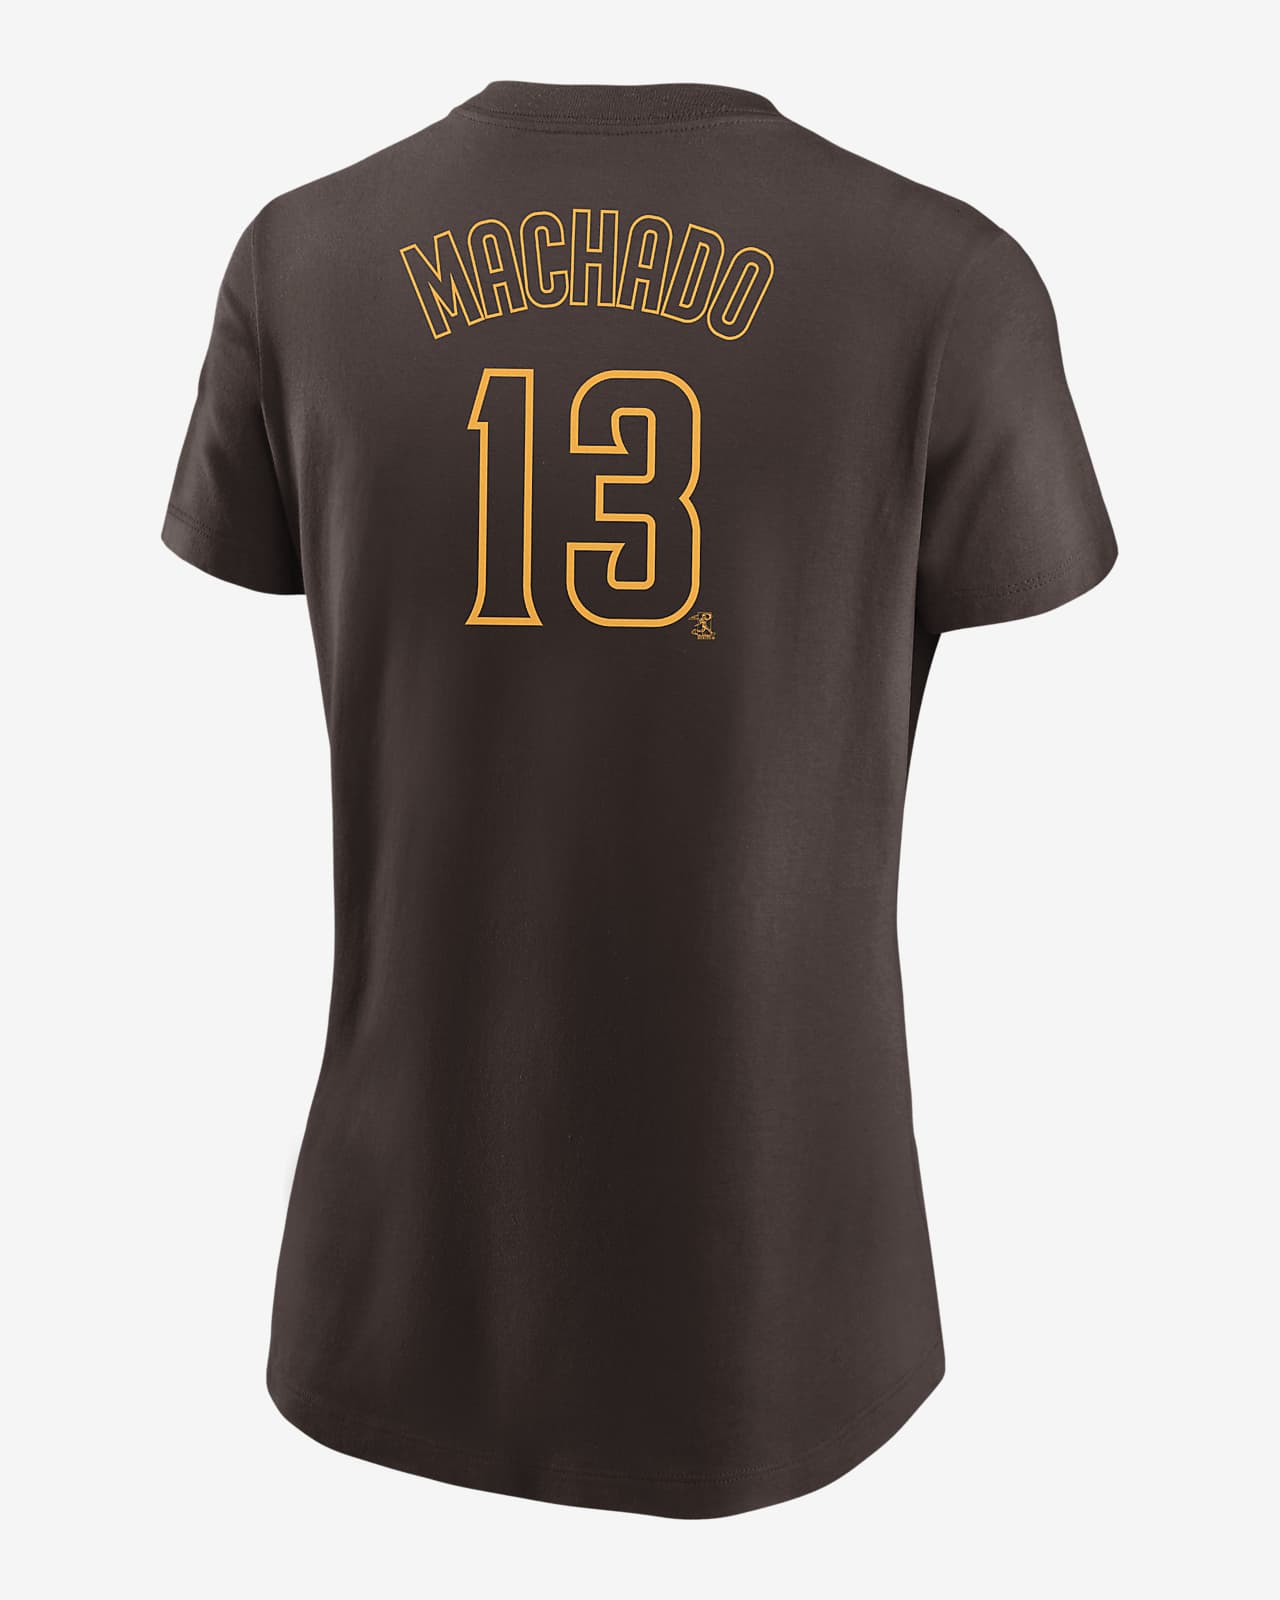 MLB San Diego Padres (Manny Machado) Women's T-Shirt